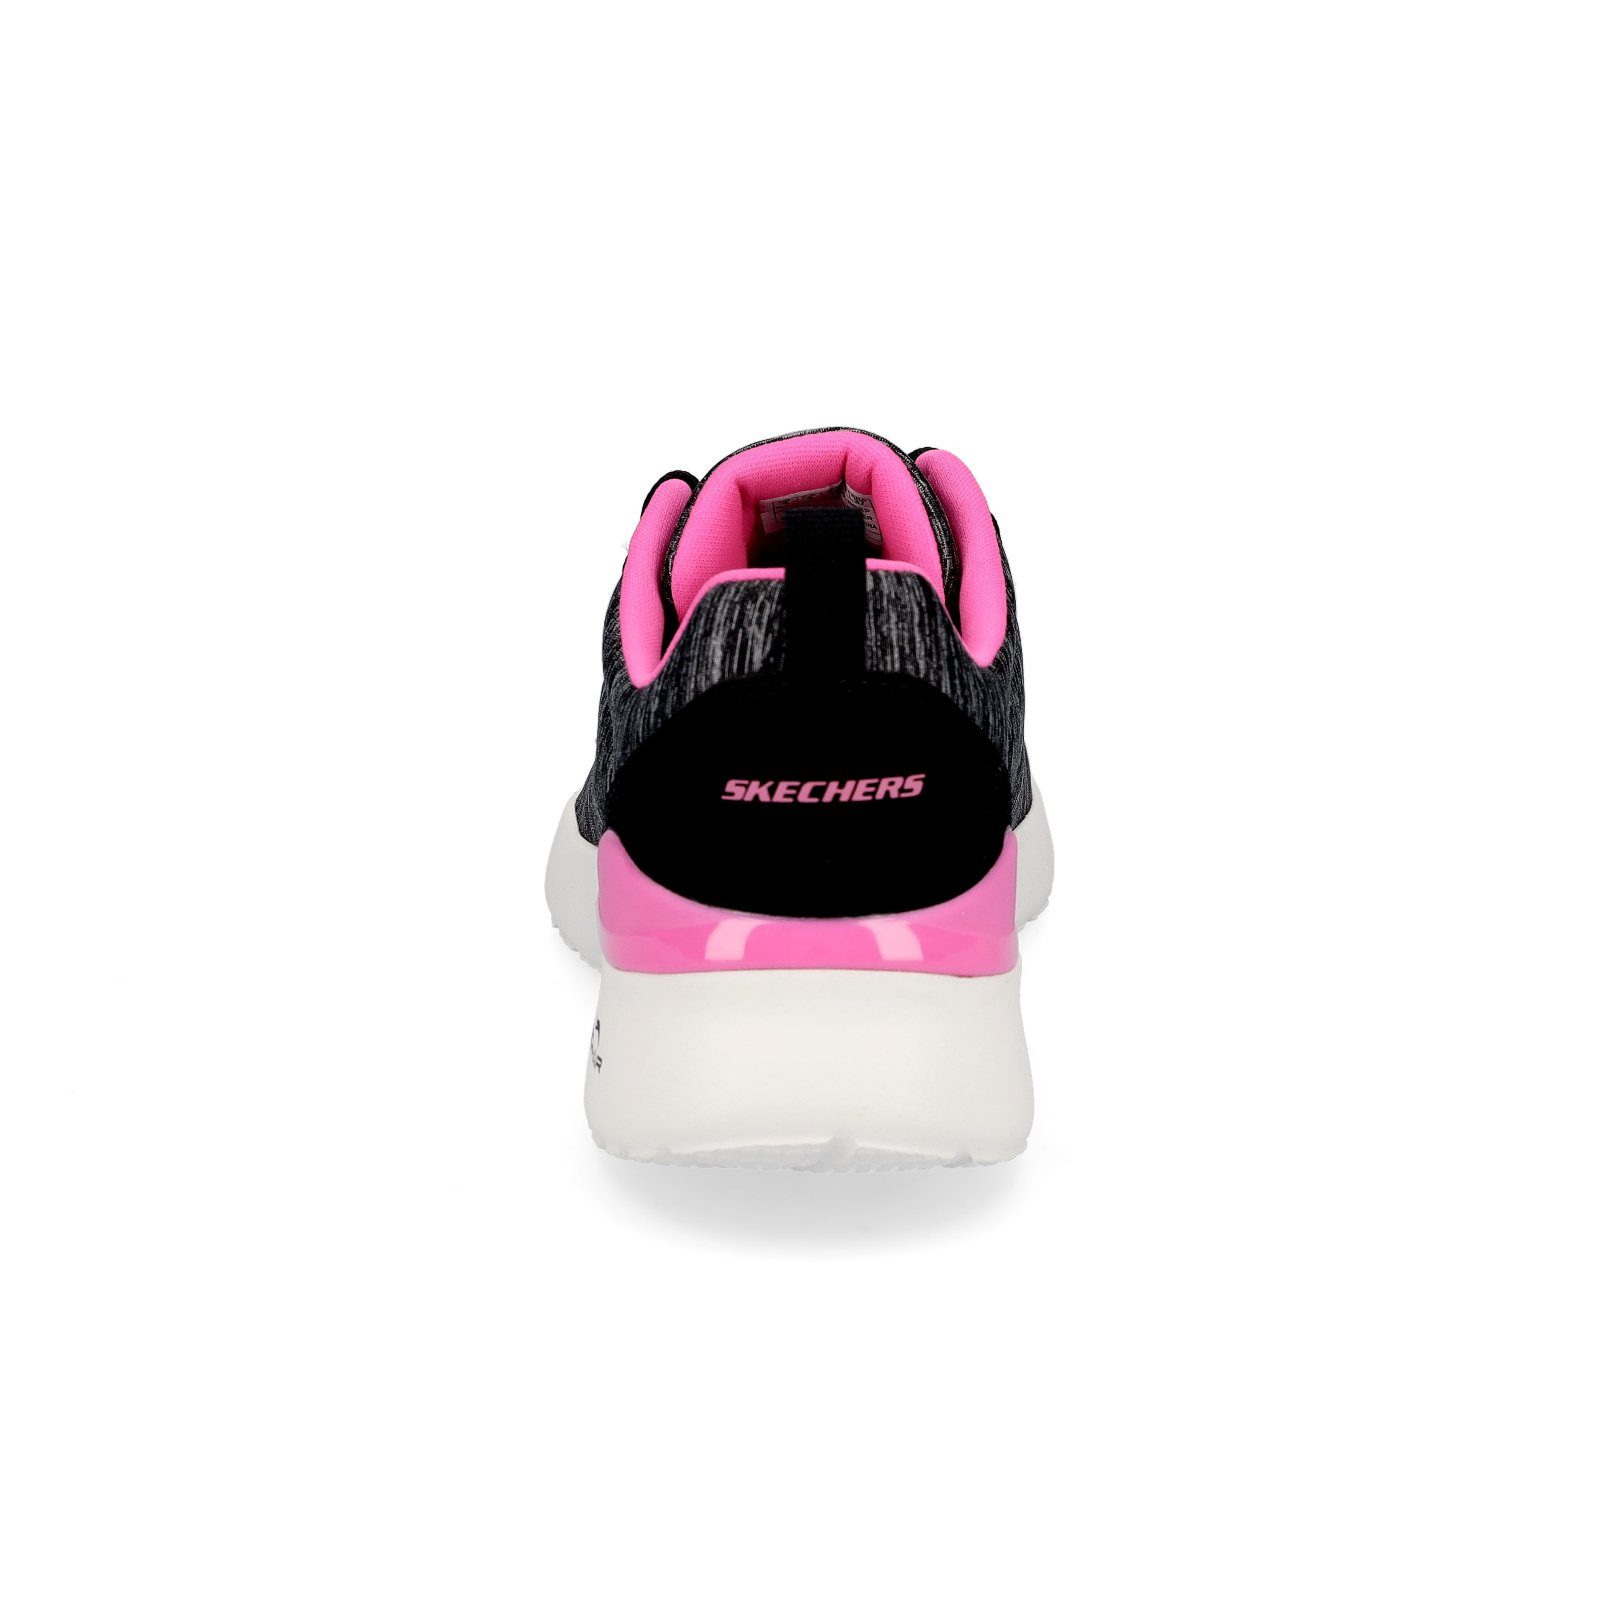 Skechers schwarz Sneaker Paradise black/hot Waves pink Damen Sneaker pink Skechers